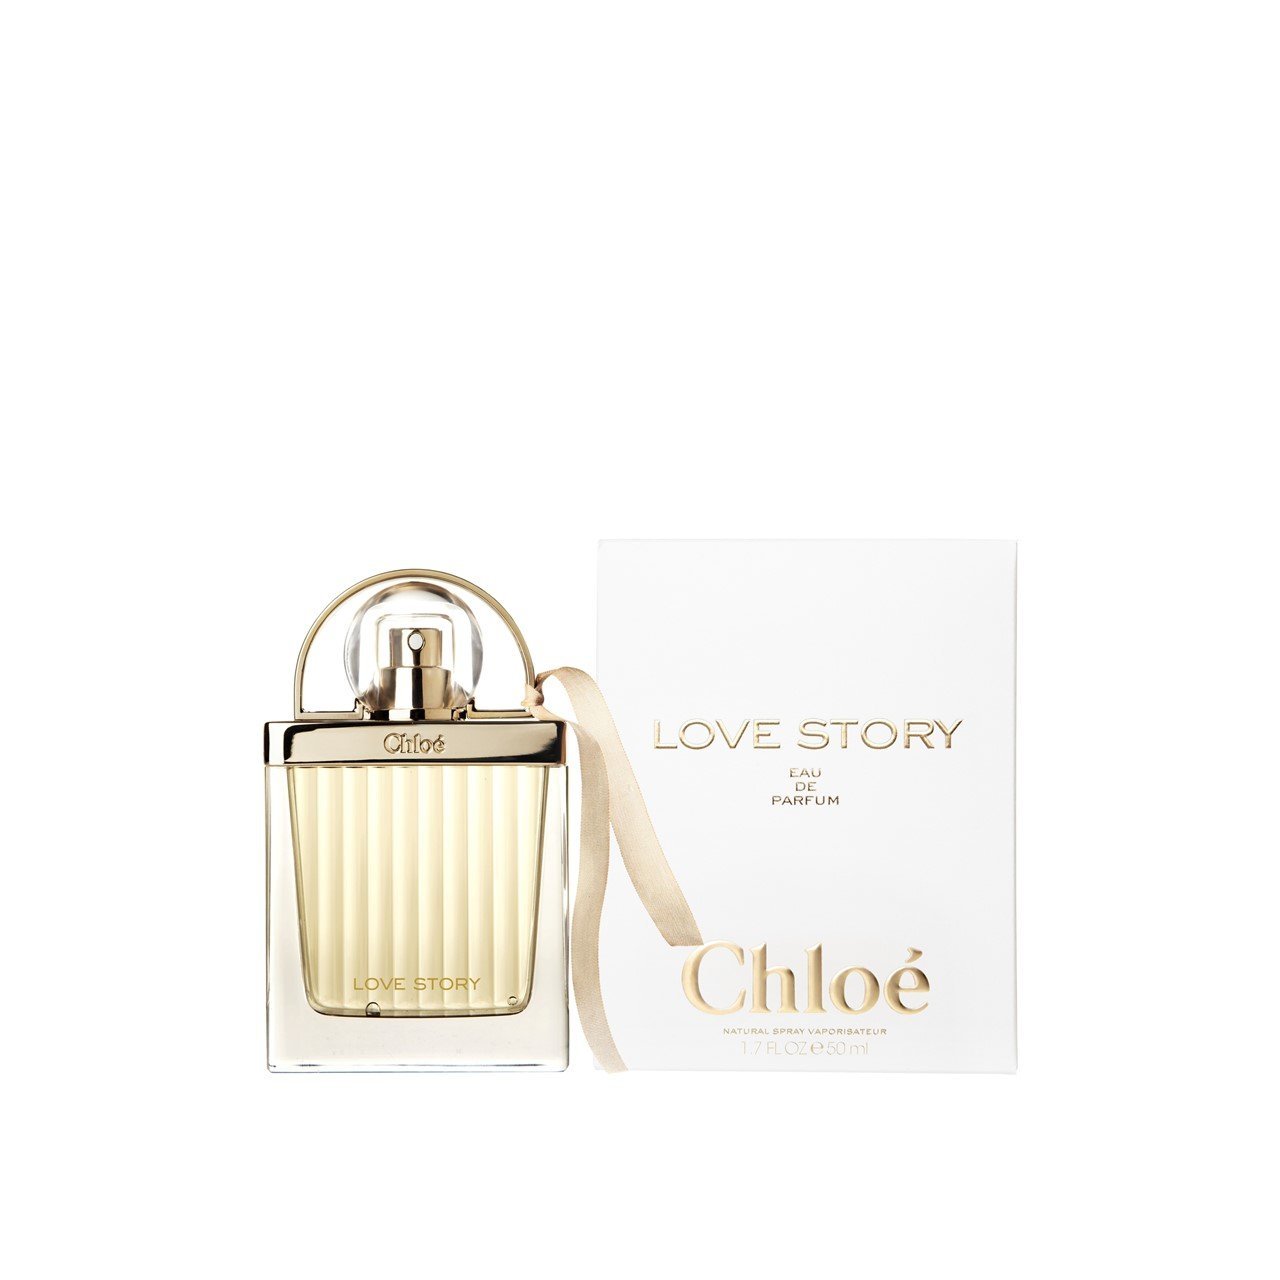 Undertrykke Grænseværdi Ung dame Buy Chloé Love Story Eau de Parfum 50ml (1.7fl oz) · USA